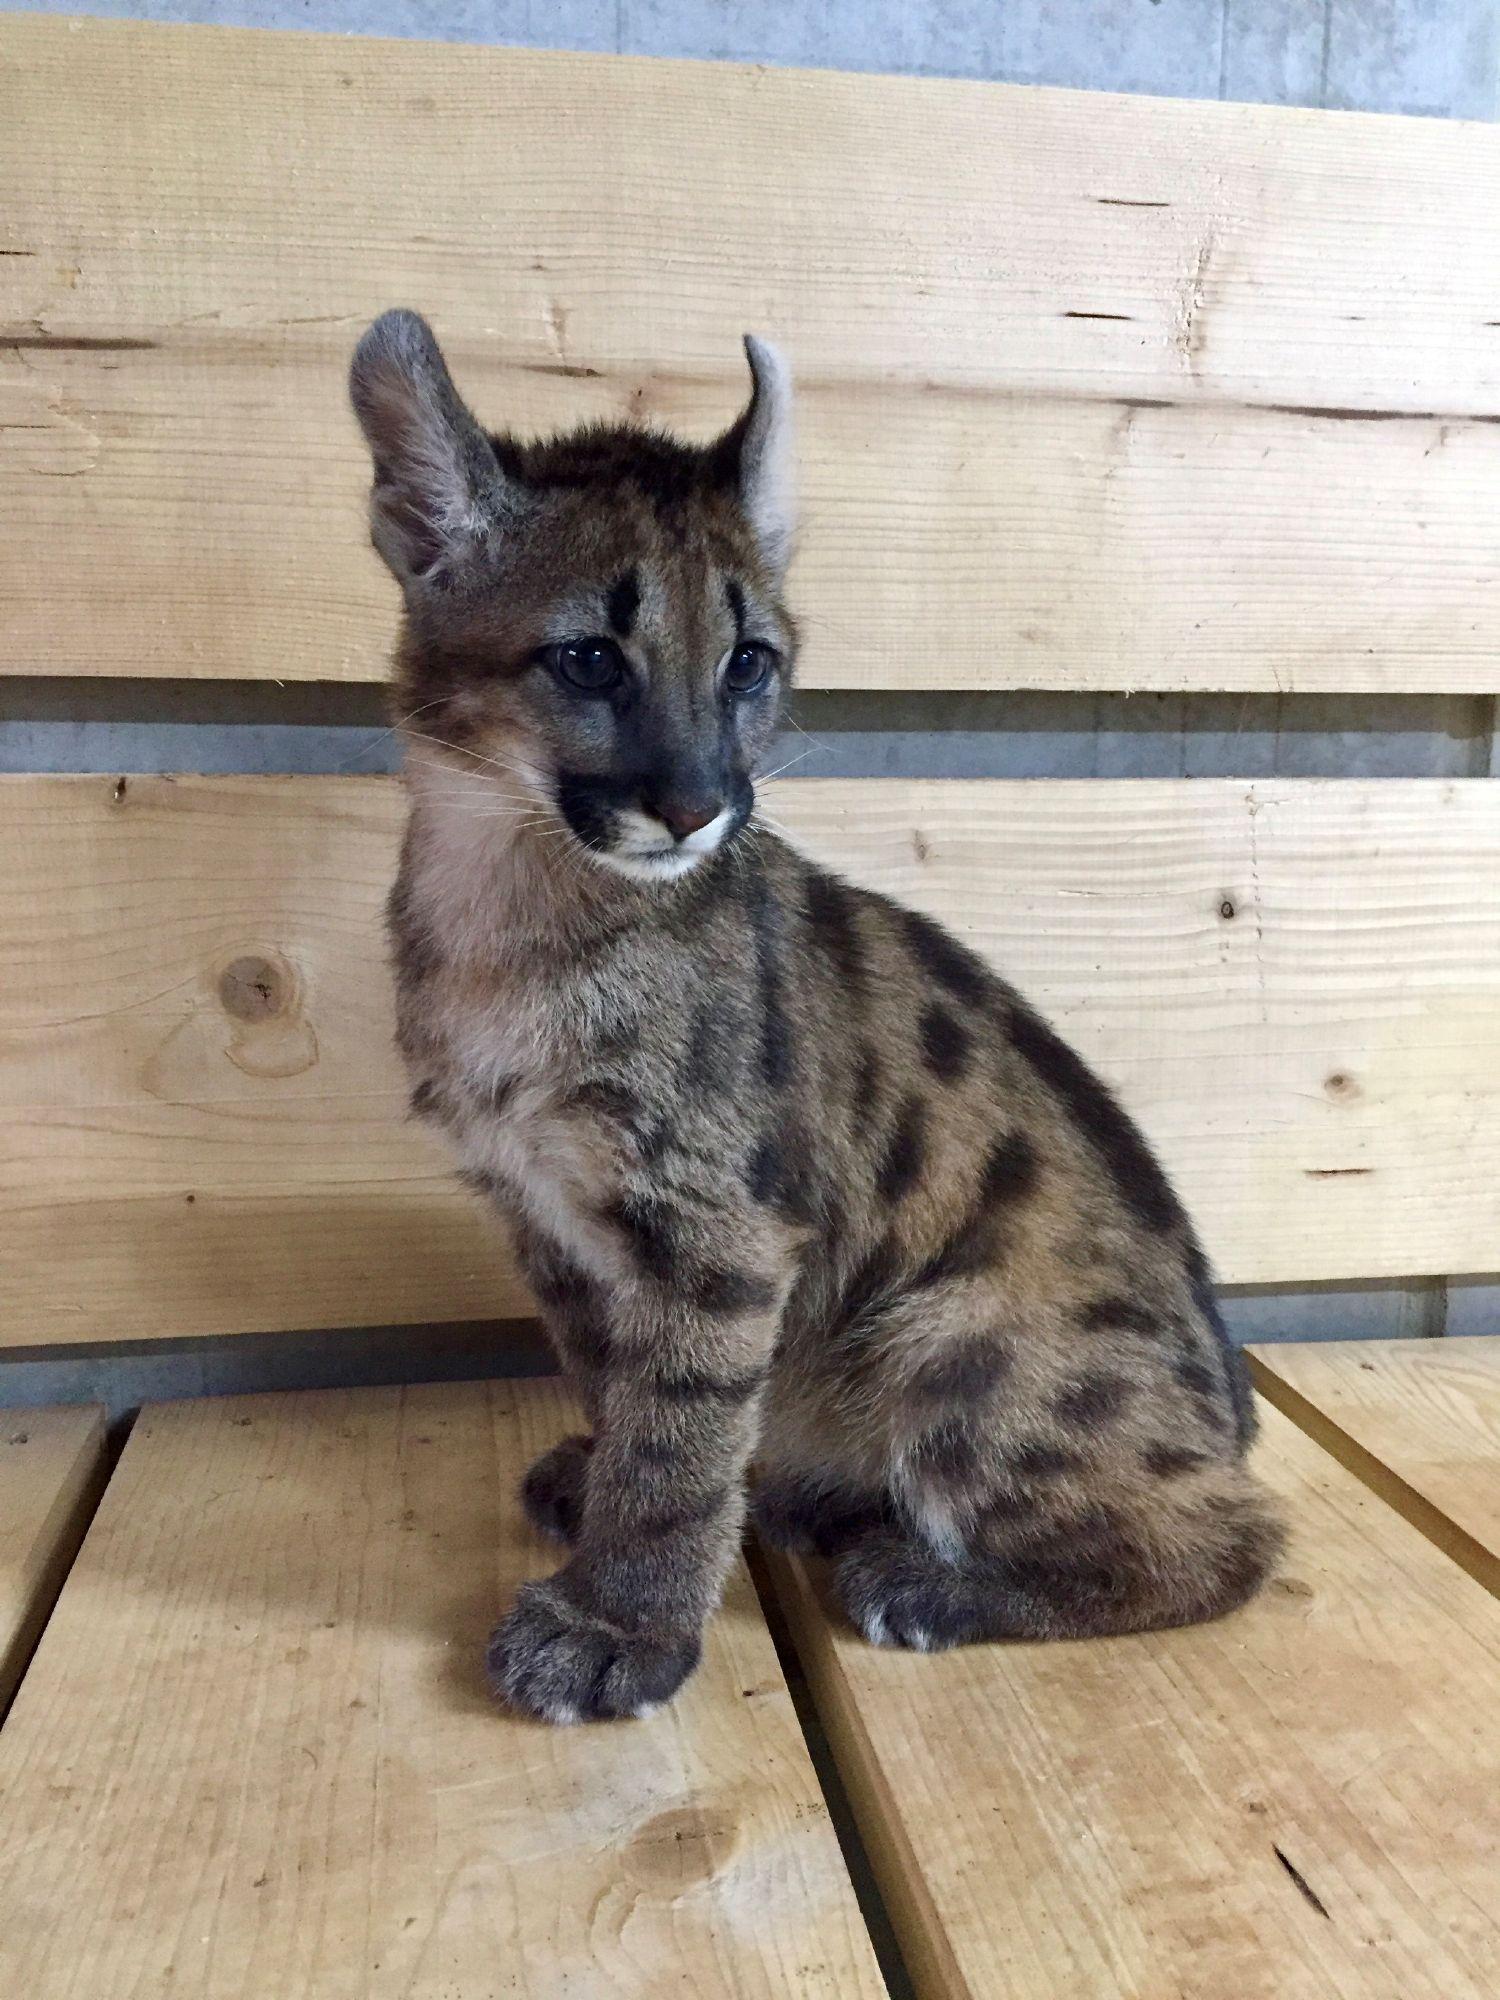 Bizarre discovery in Germany: Puma cub 